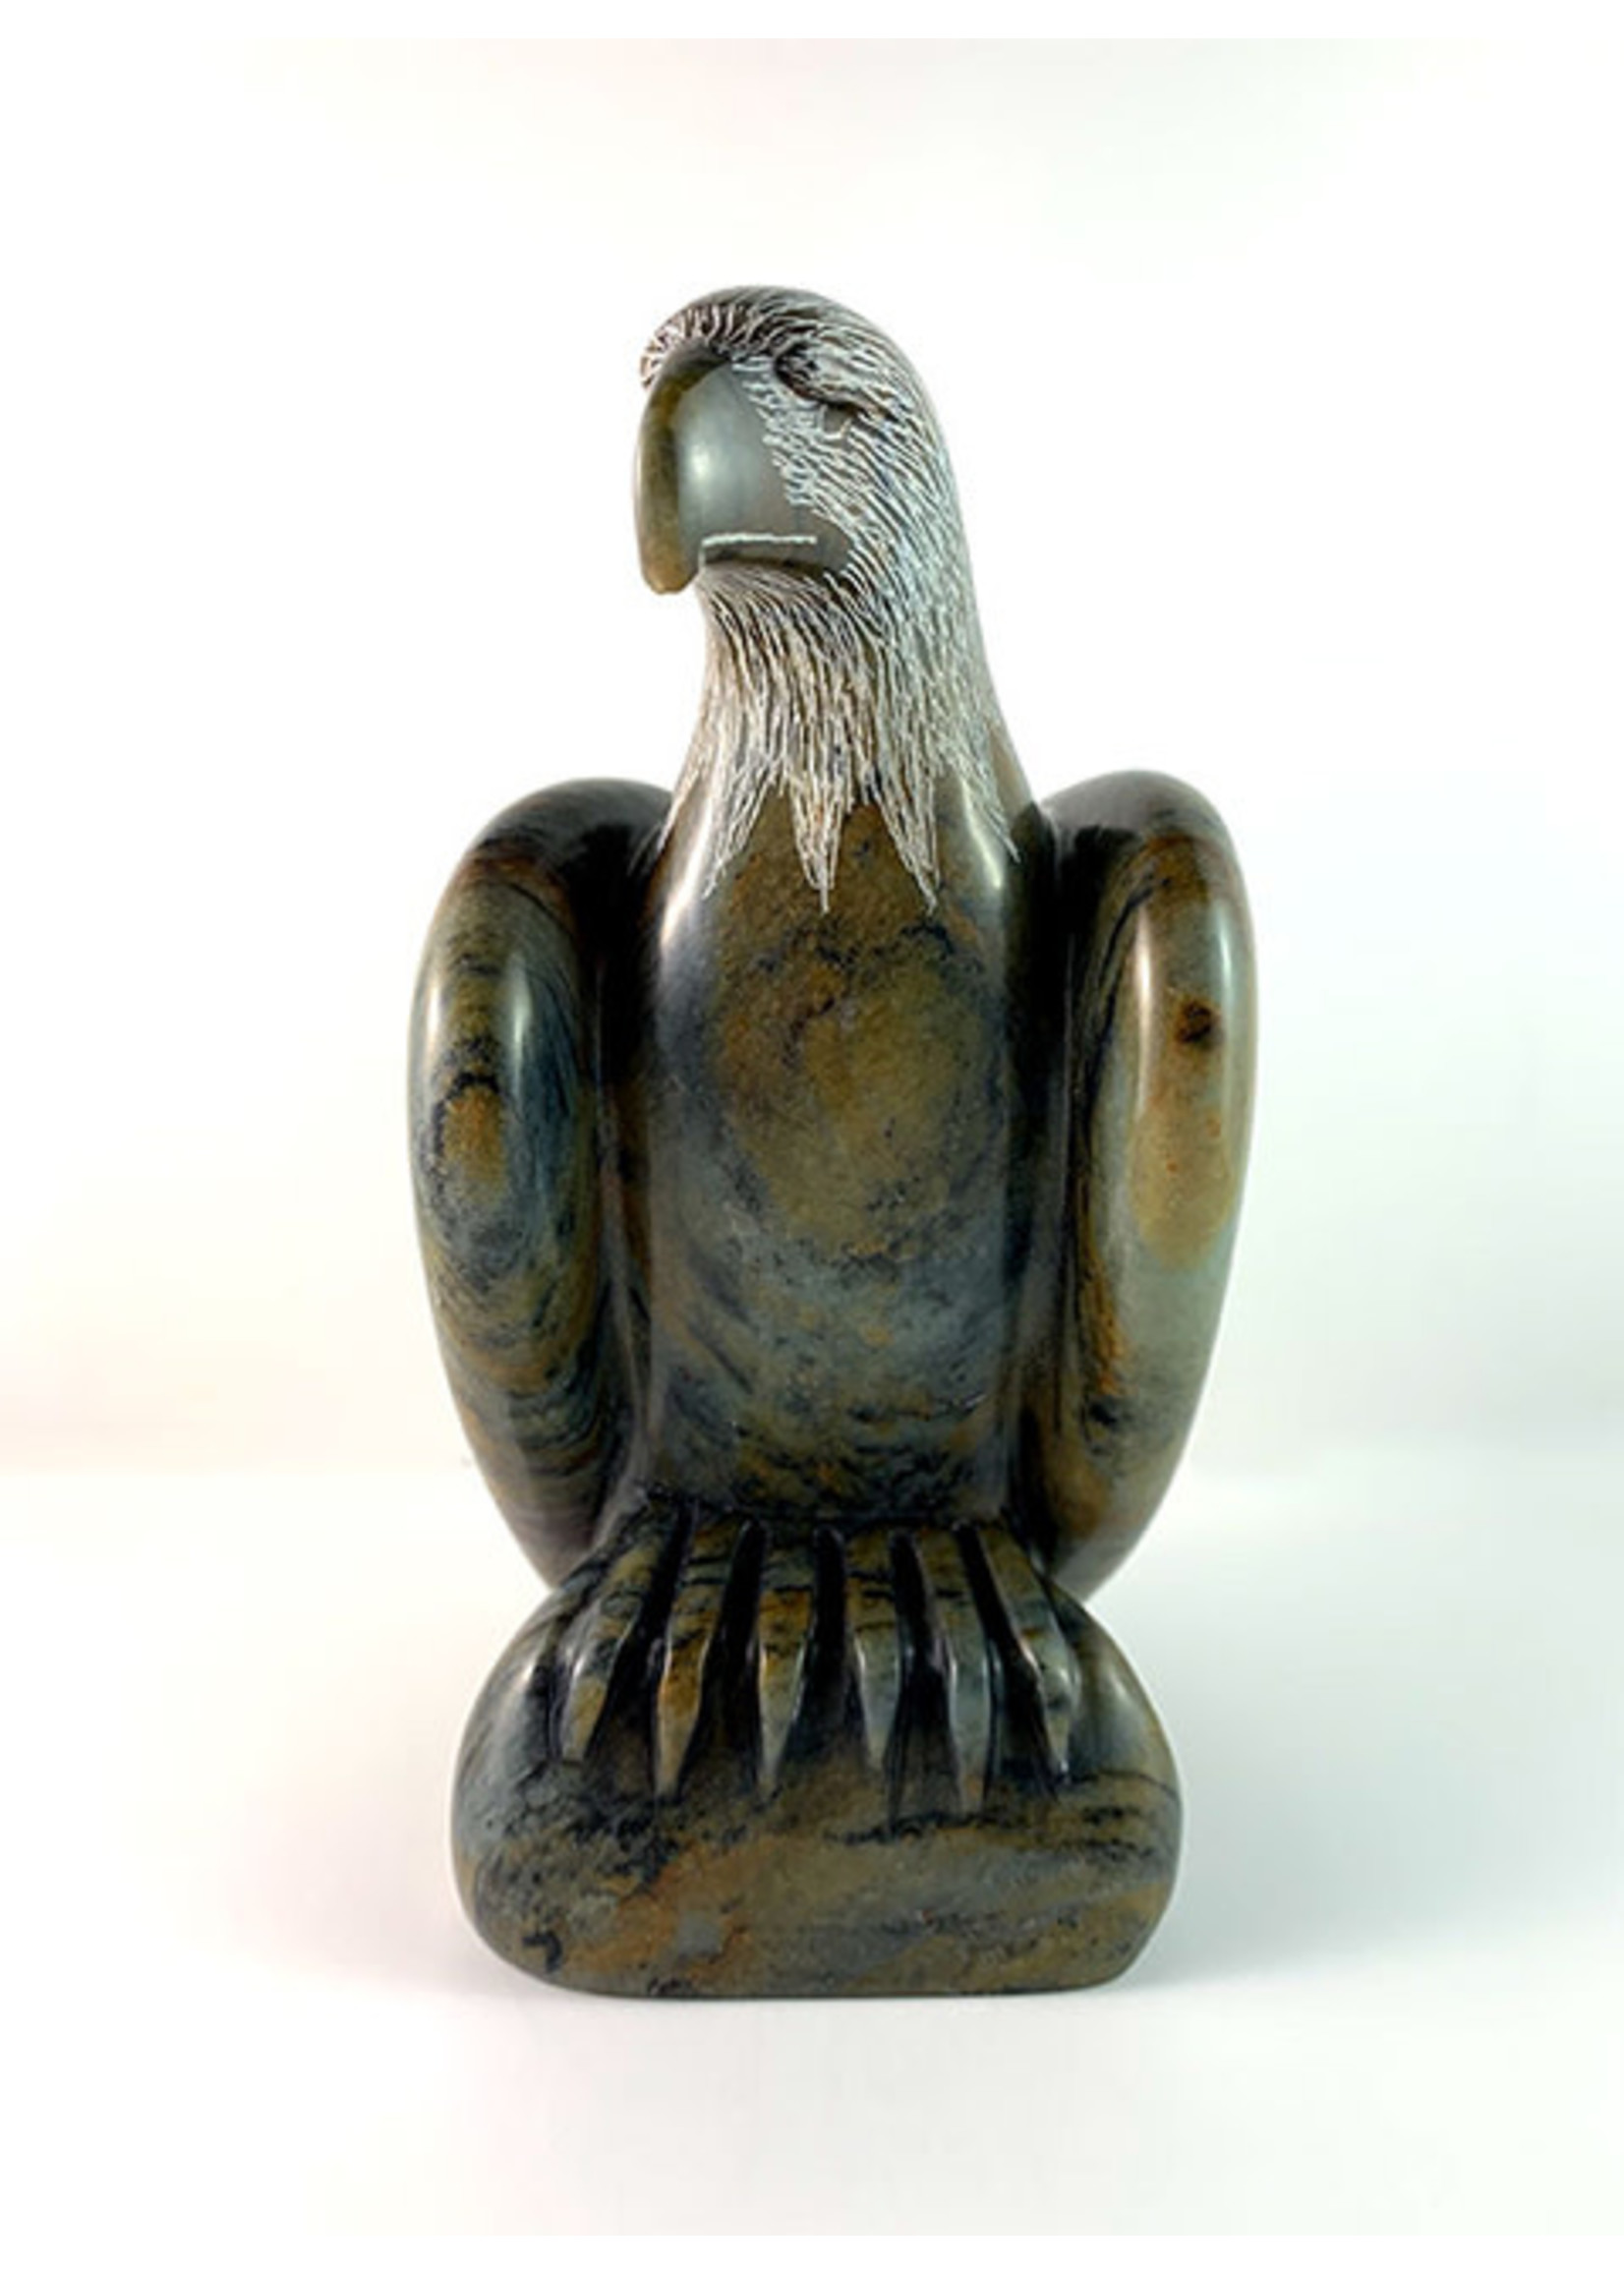 Soapstone Carving Kits: Eagle